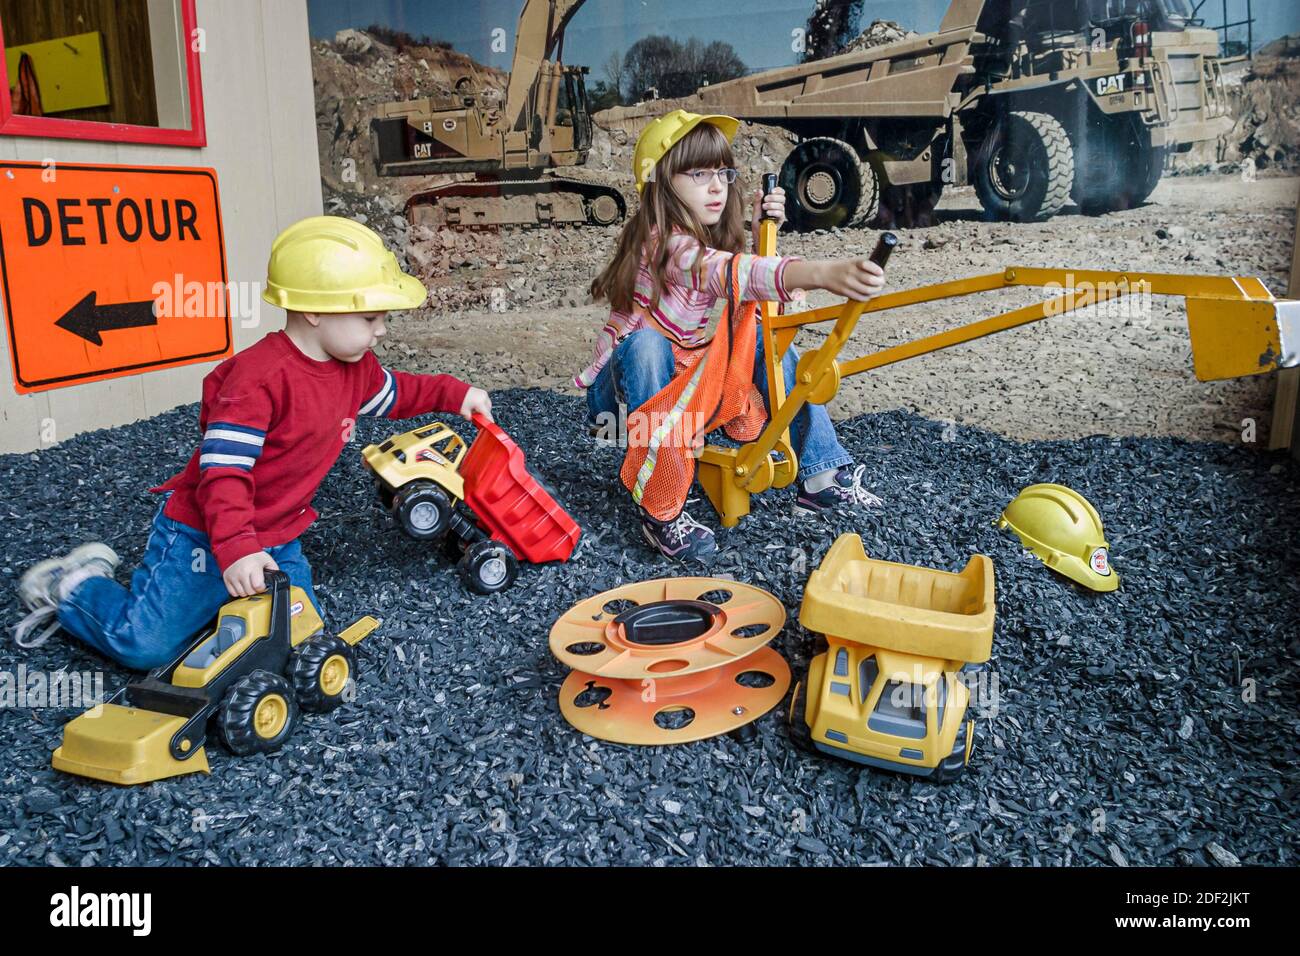 Alabama Gadsden Imagination Place,children's interactive hands on museum,mining boy girl pretending play playing, Stock Photo